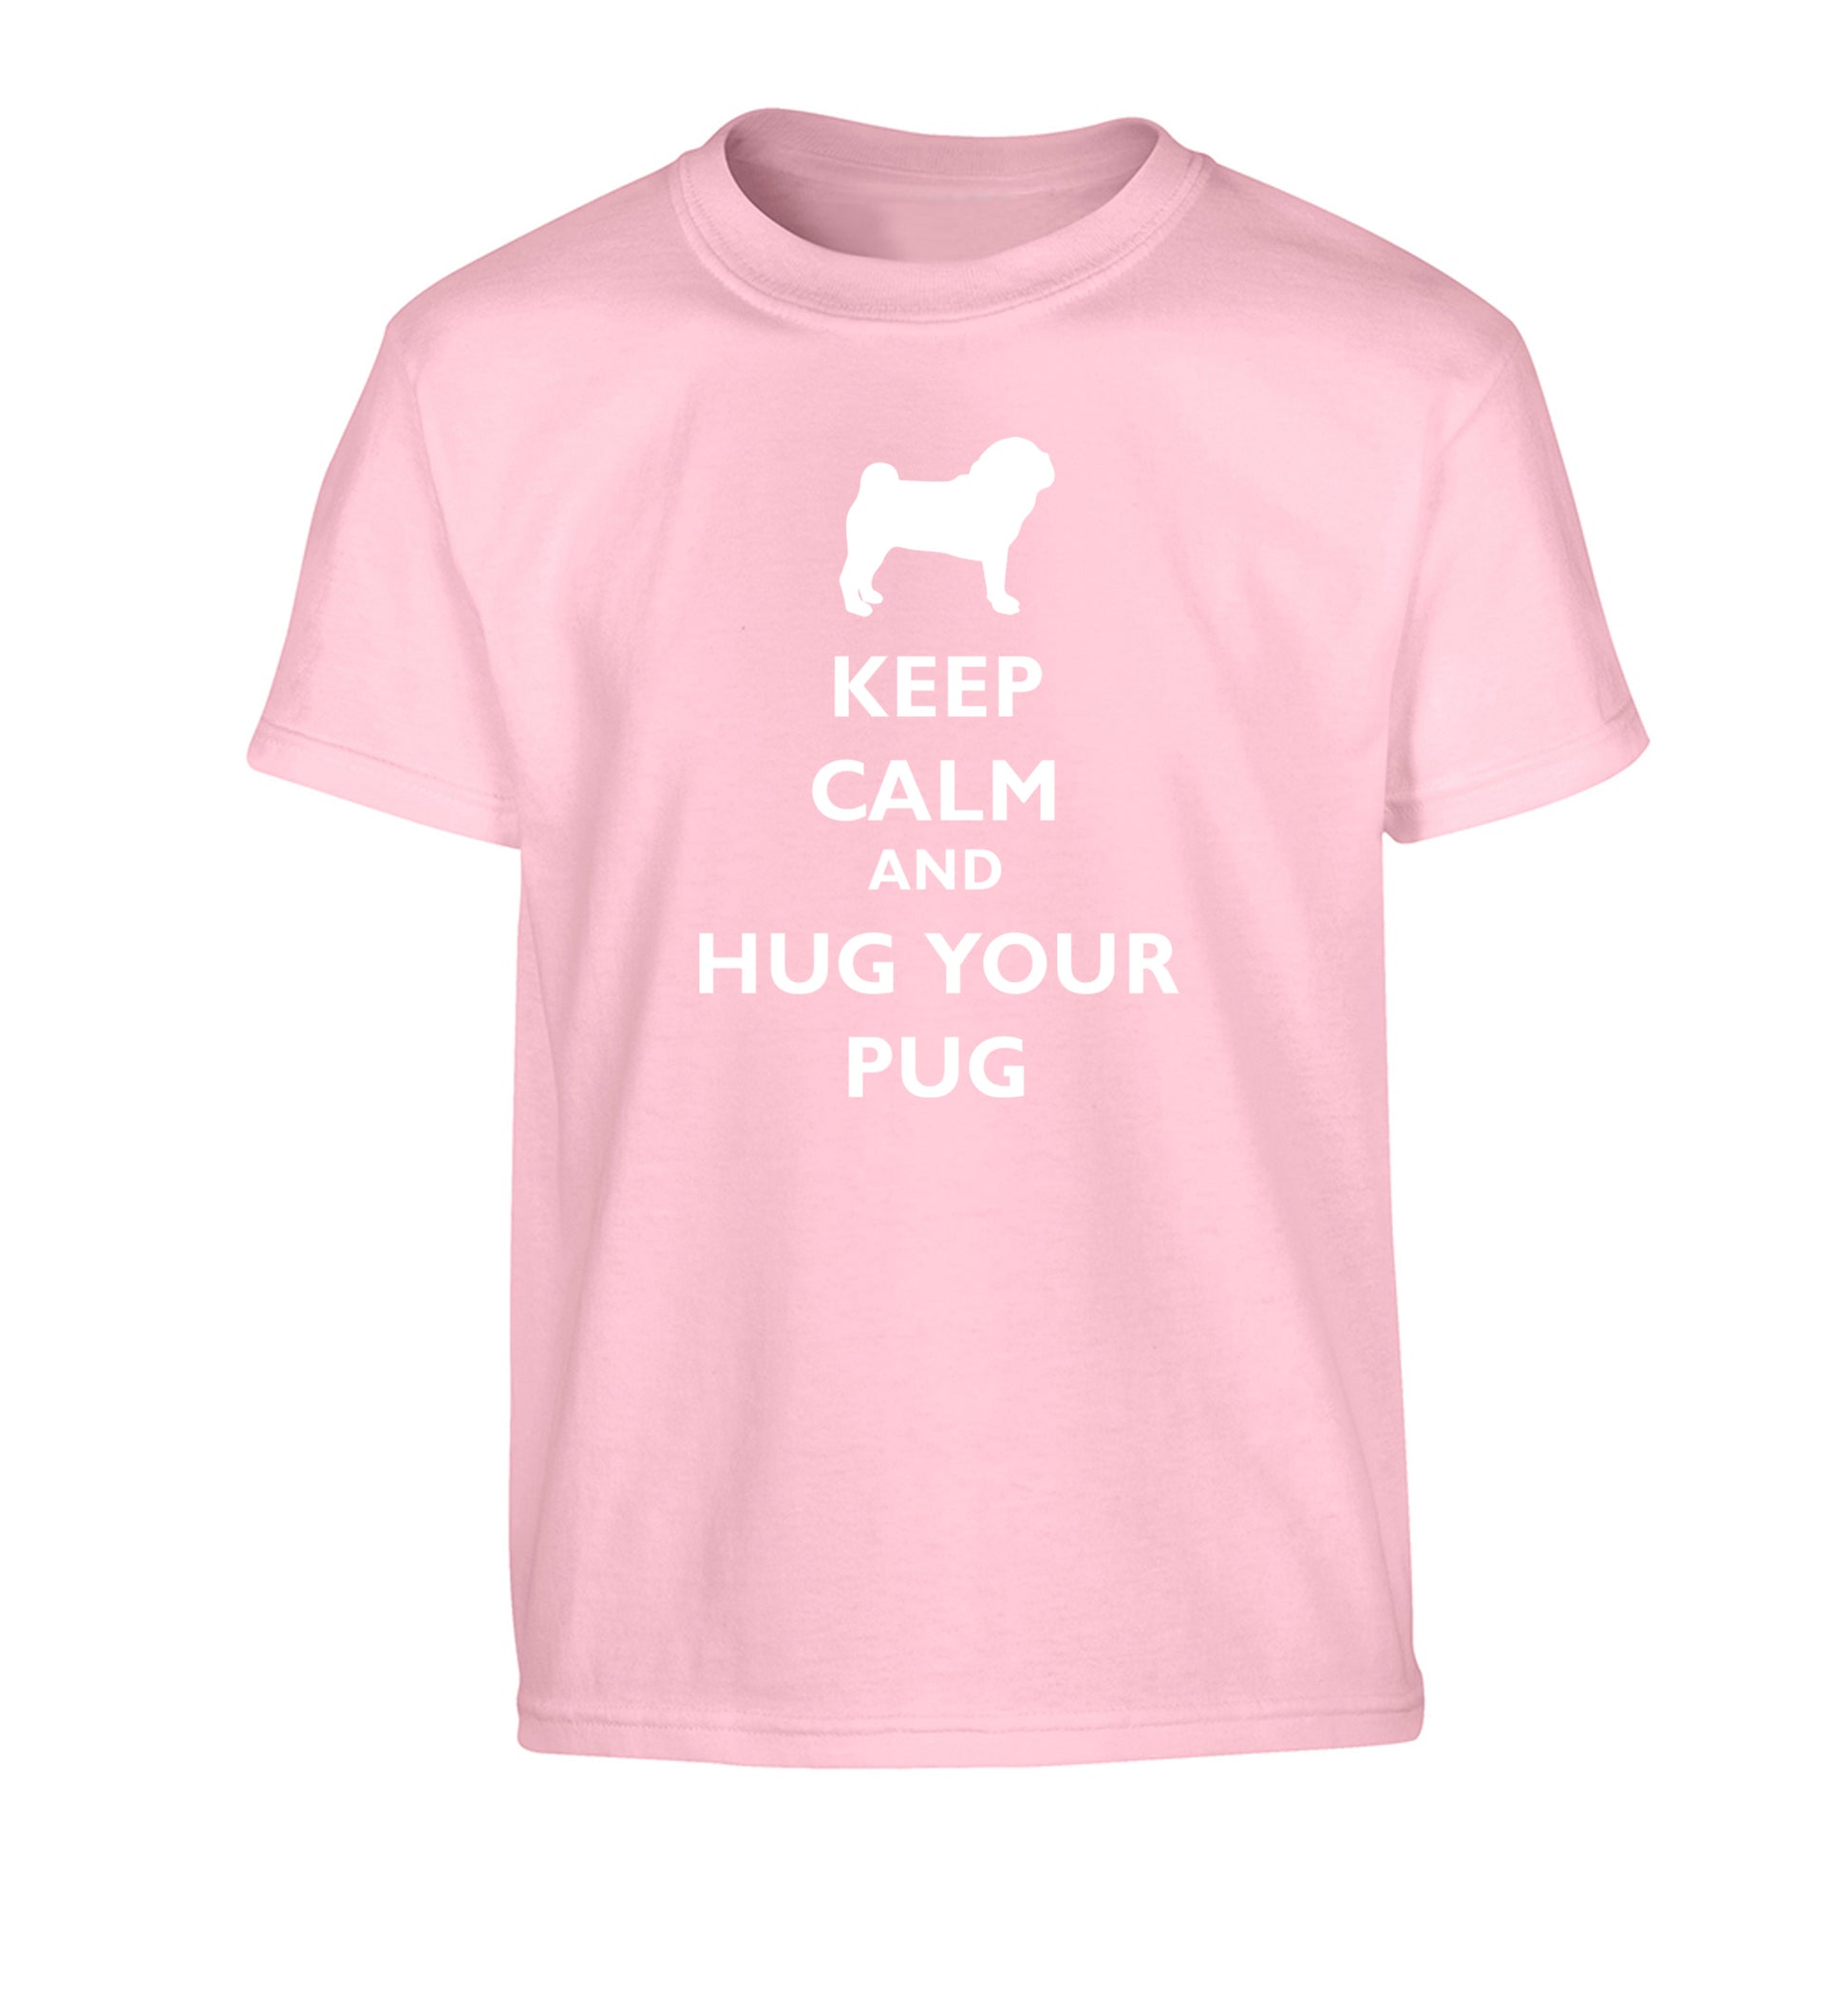 Keep calm and hug your pug Children's light pink Tshirt 12-13 Years